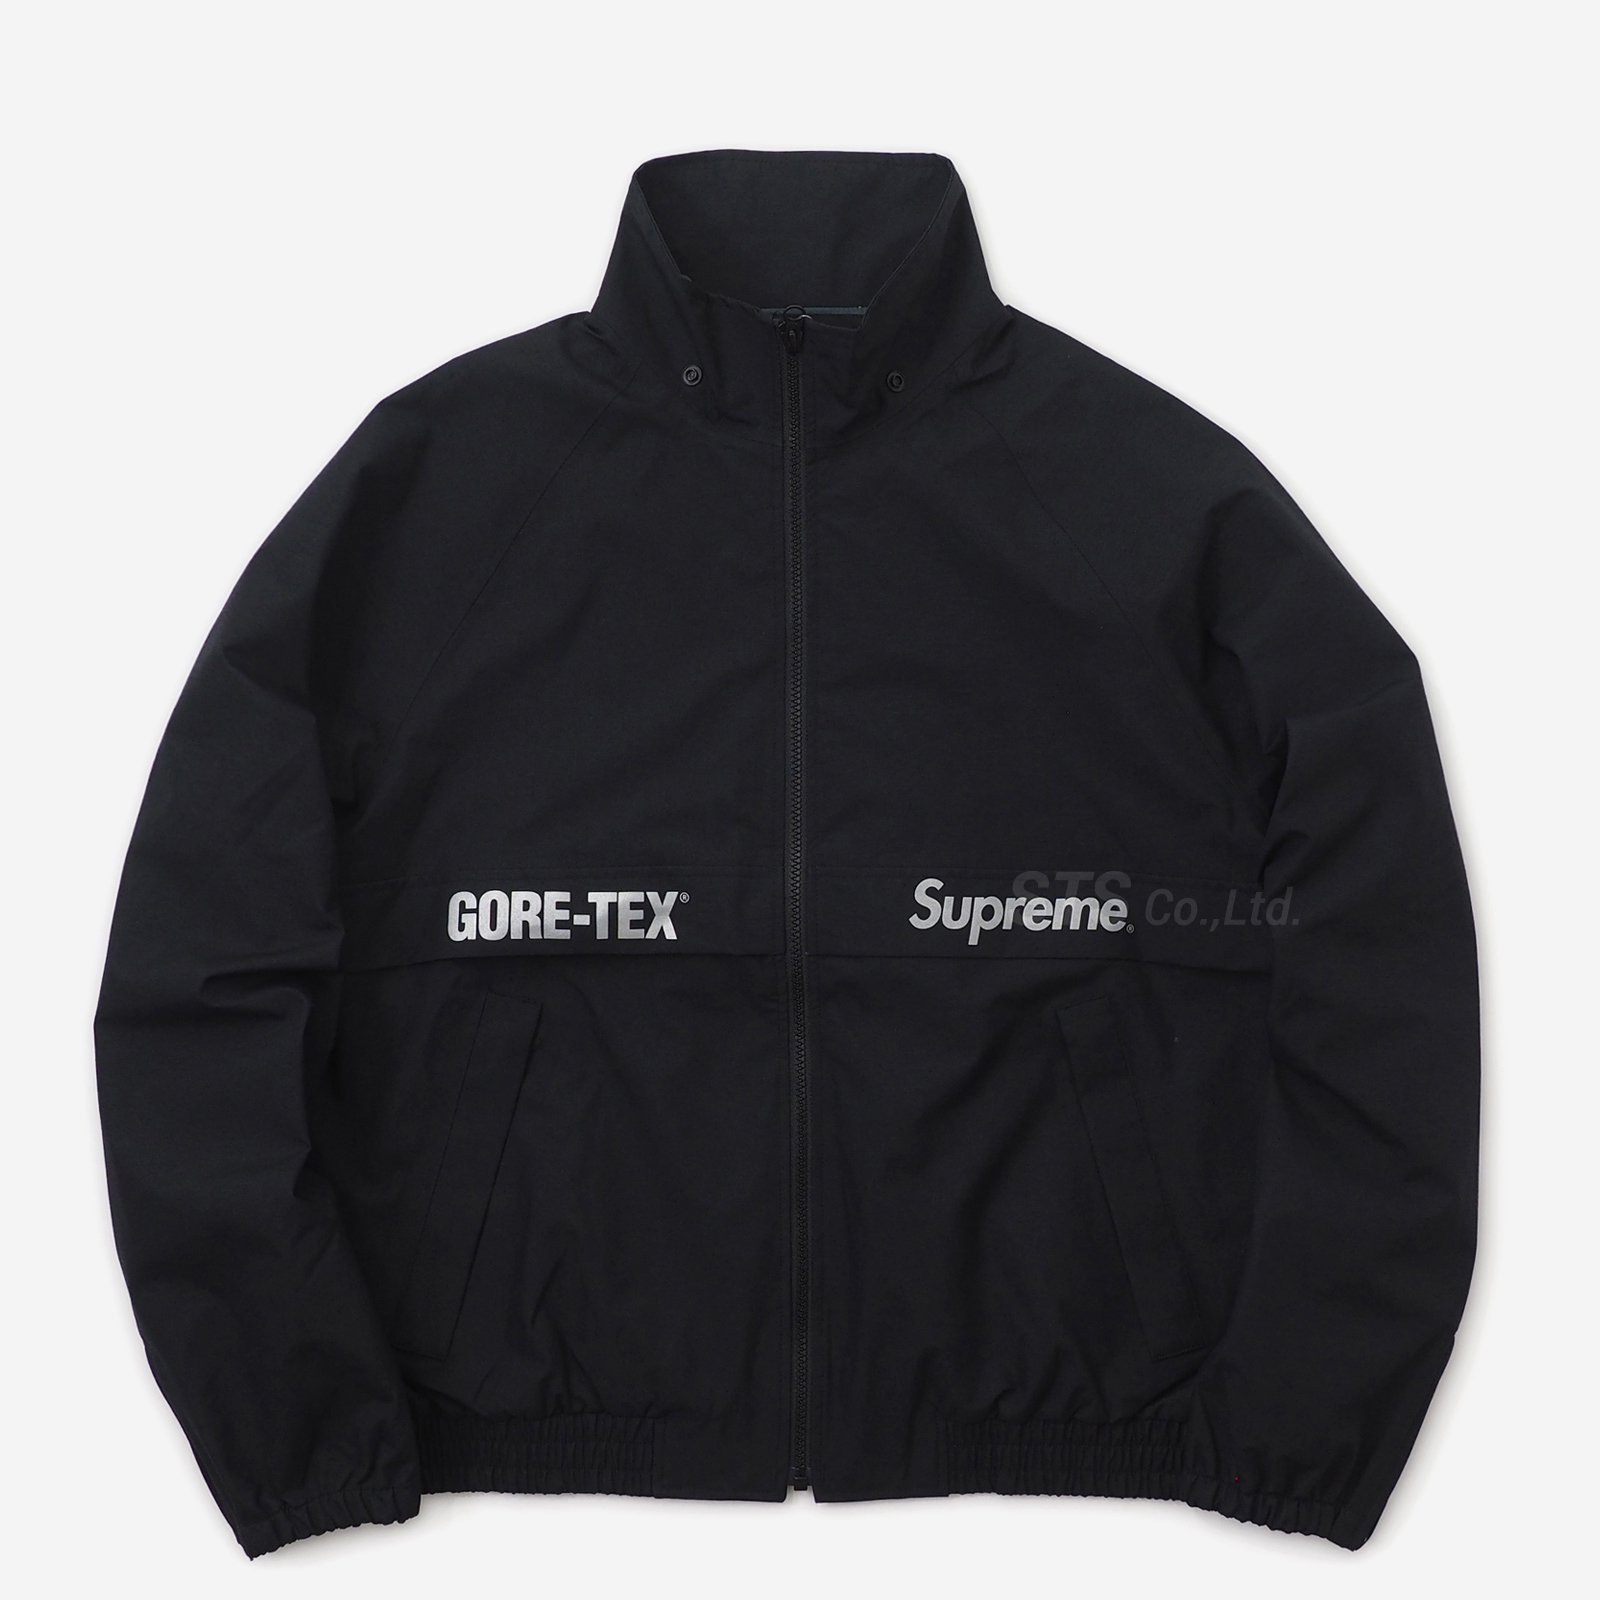 定形外発送送料無料商品 supreme 18FW GORE-TEX Court Jacket